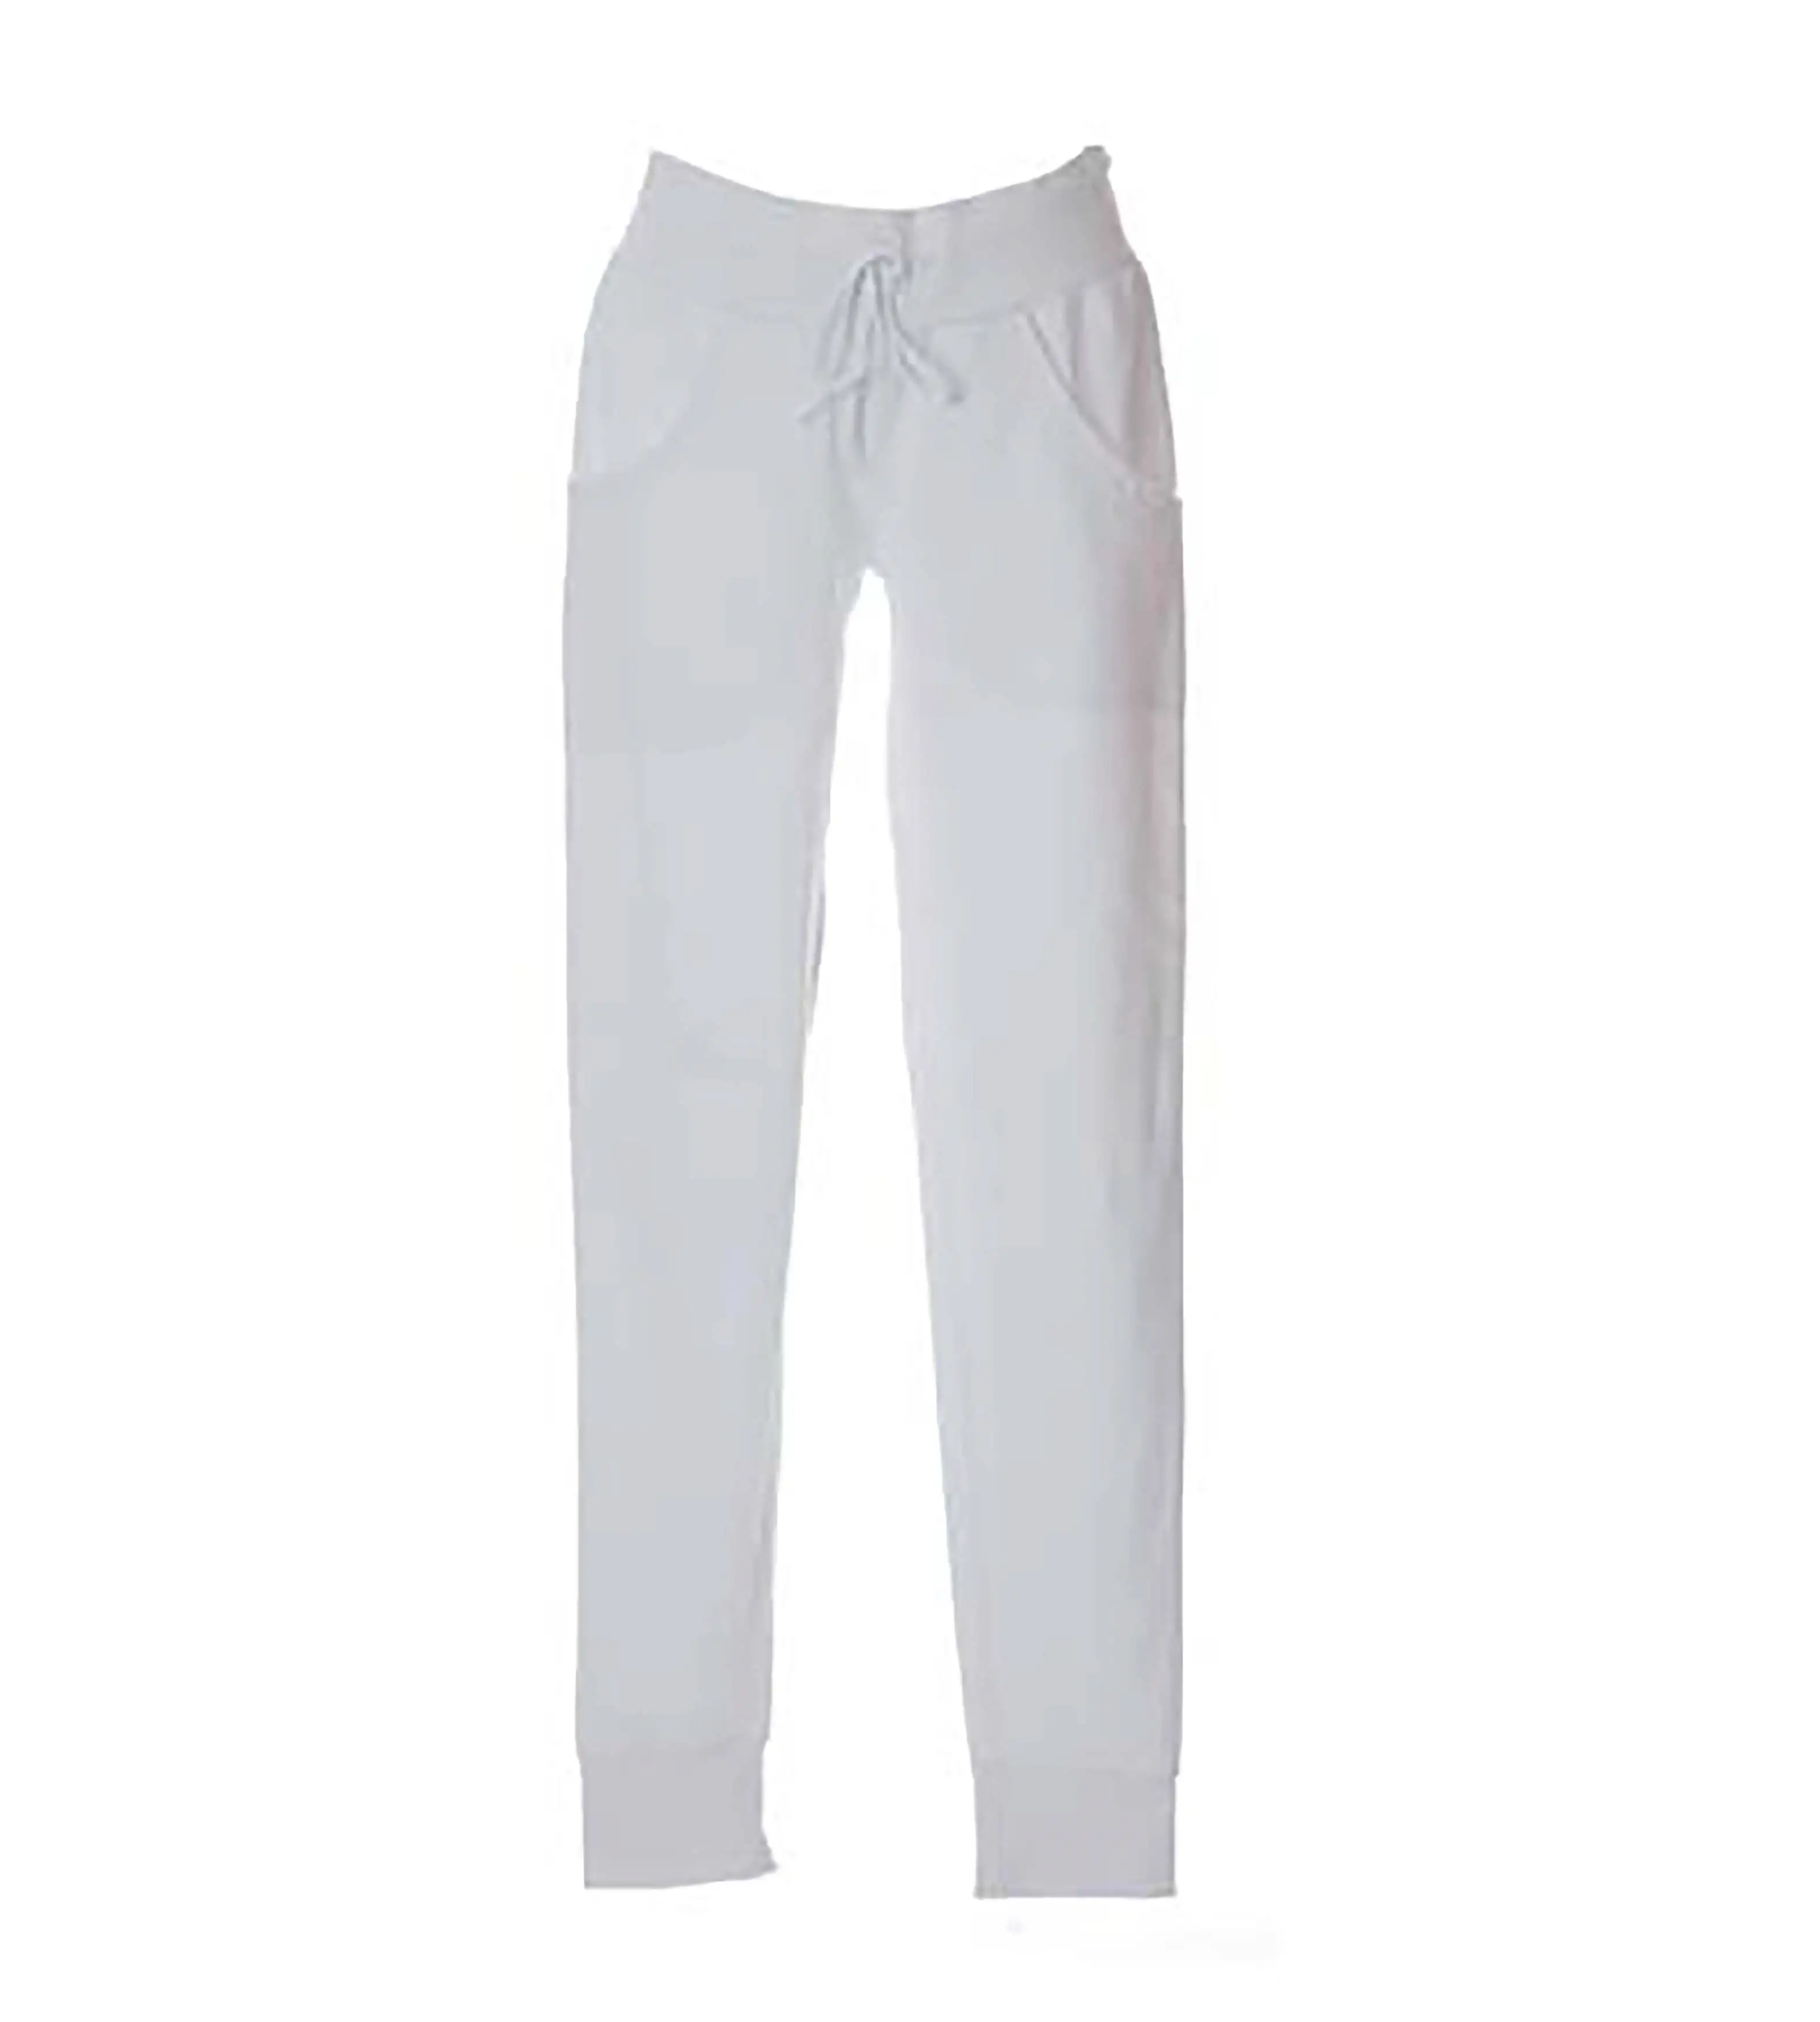 Pantalone pavia lady - white - s